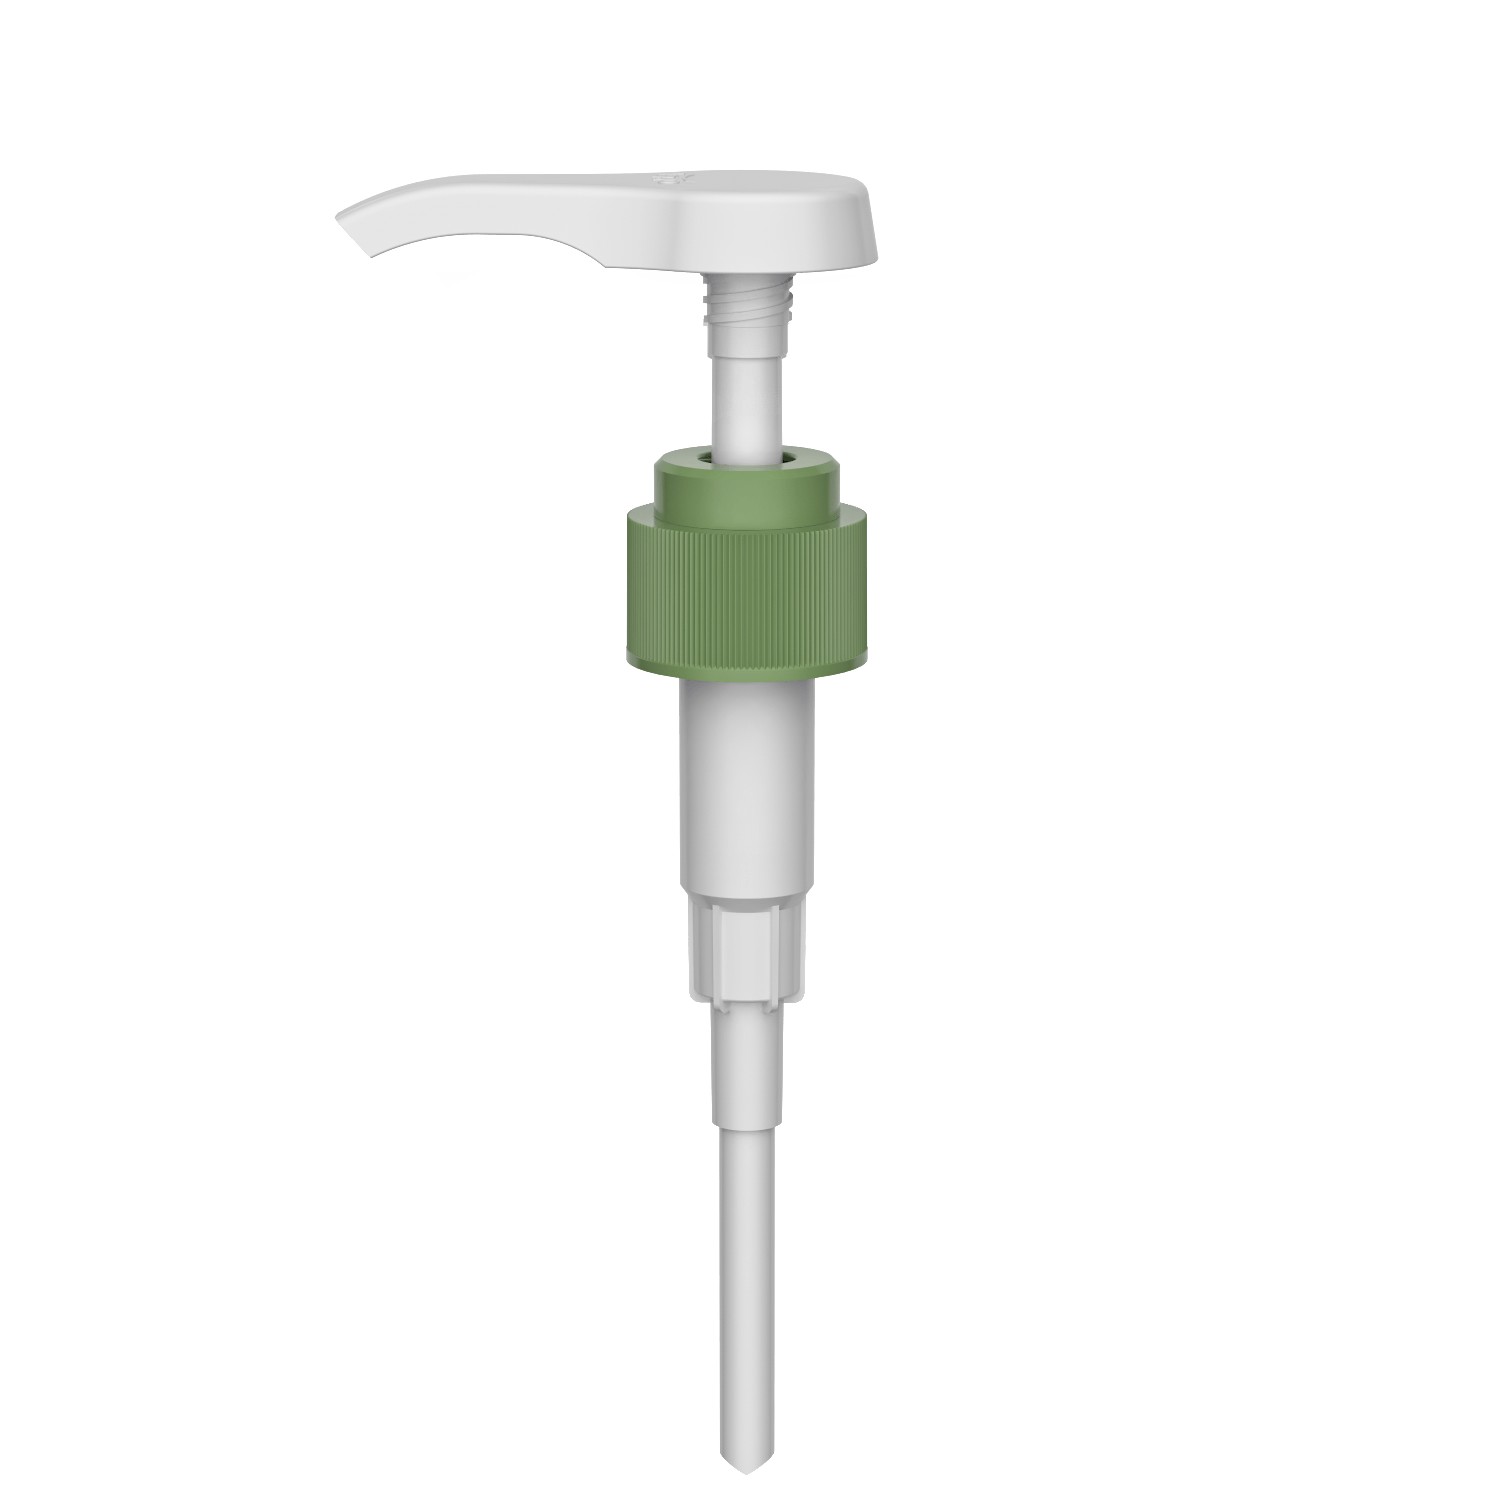 HD-608B 28/410 liquid high dosage washing shampoo output dispenser 3.5-4.0CC lotion pump